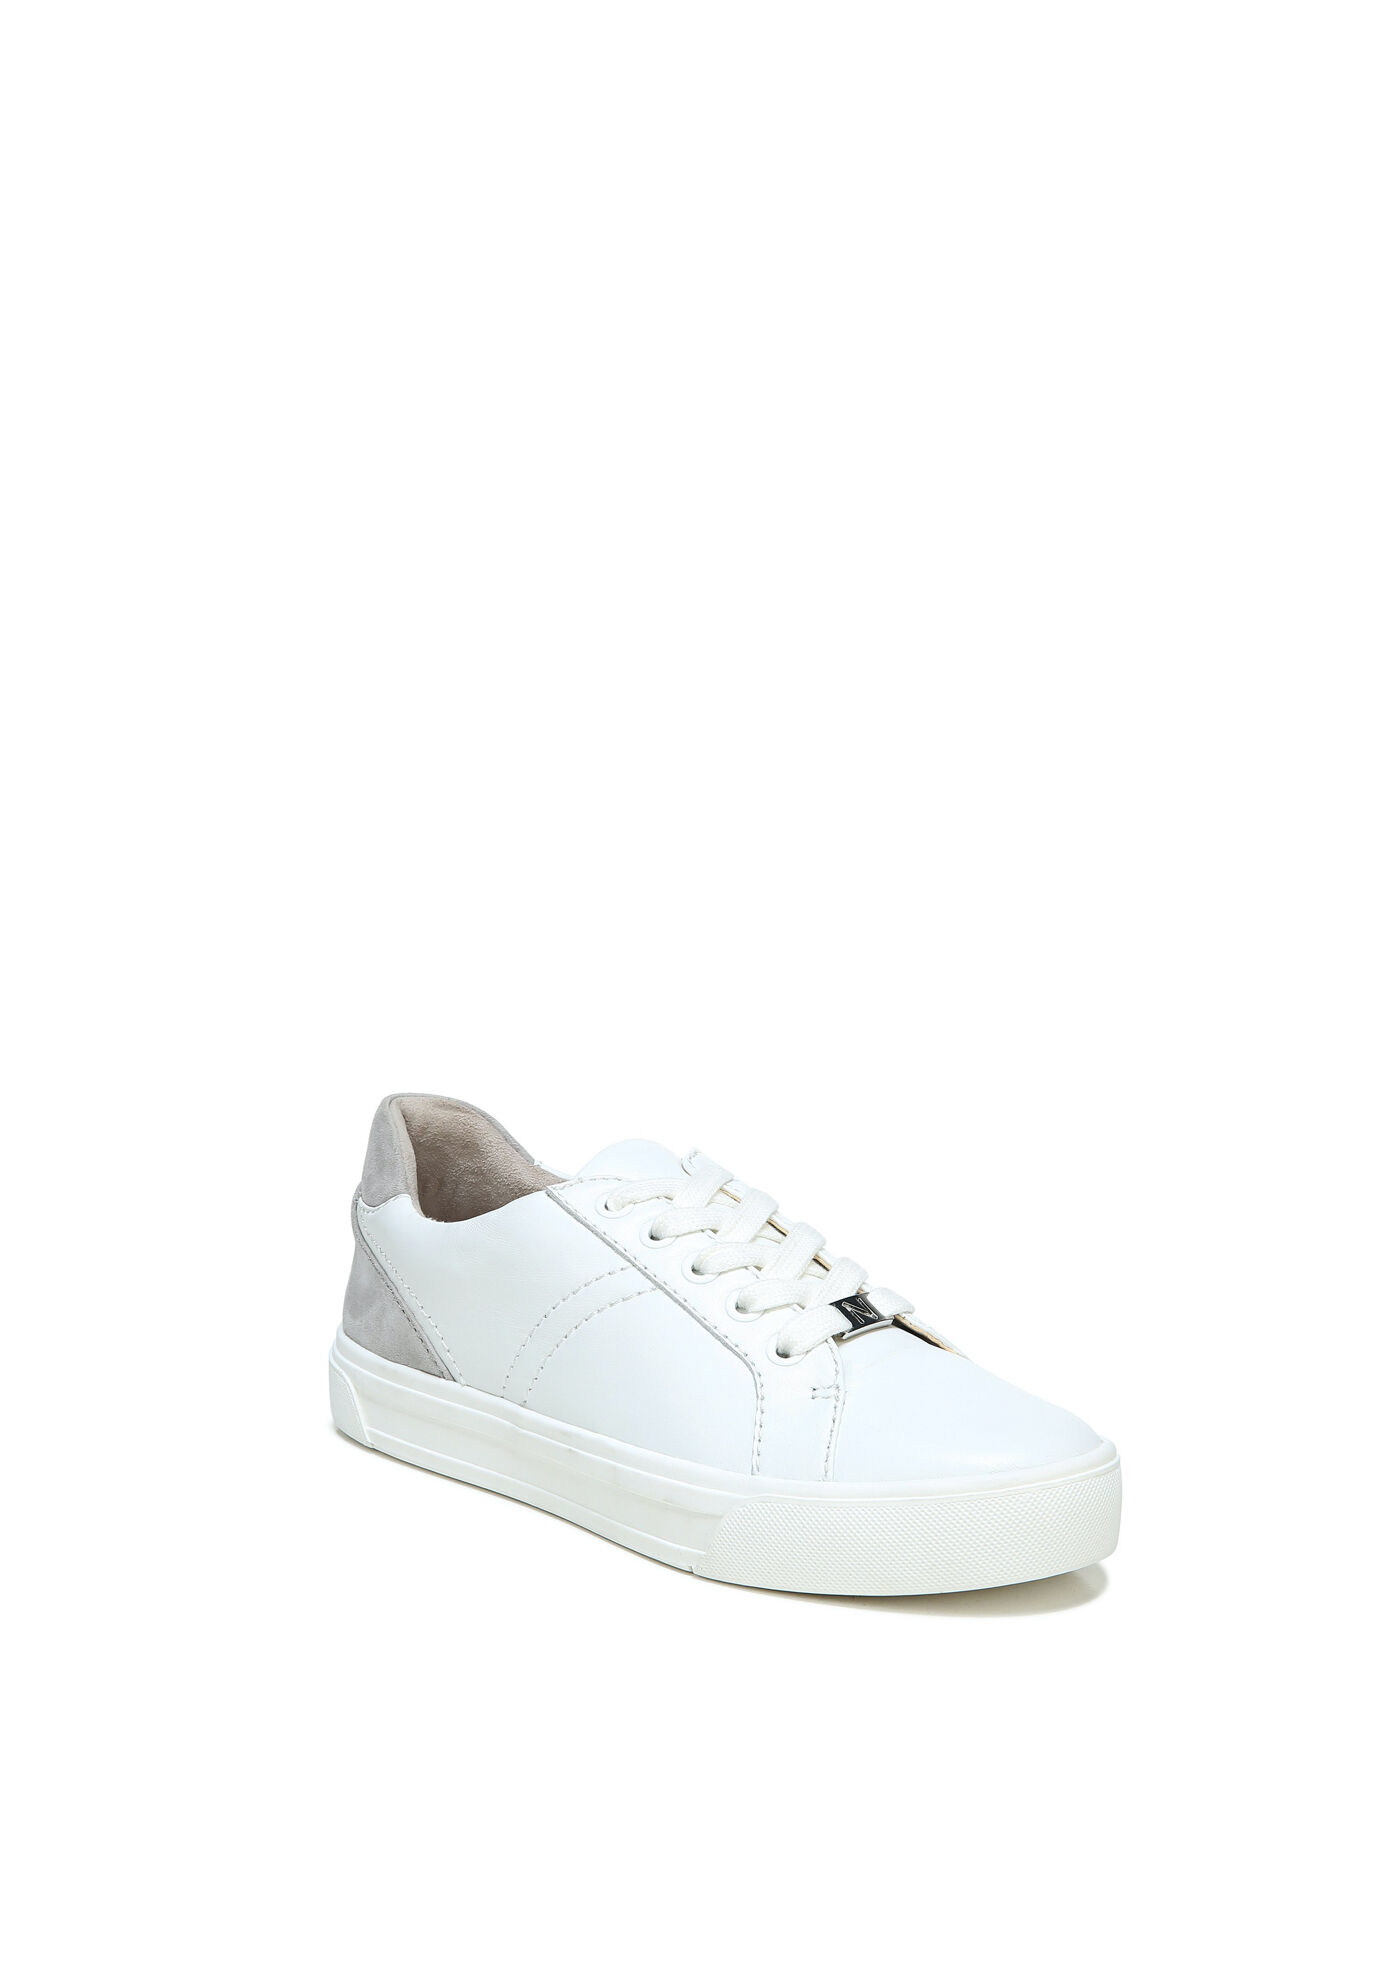 Wide Width Women's Astara Sneakers by Naturalizer in White Grey (Size 6 W)